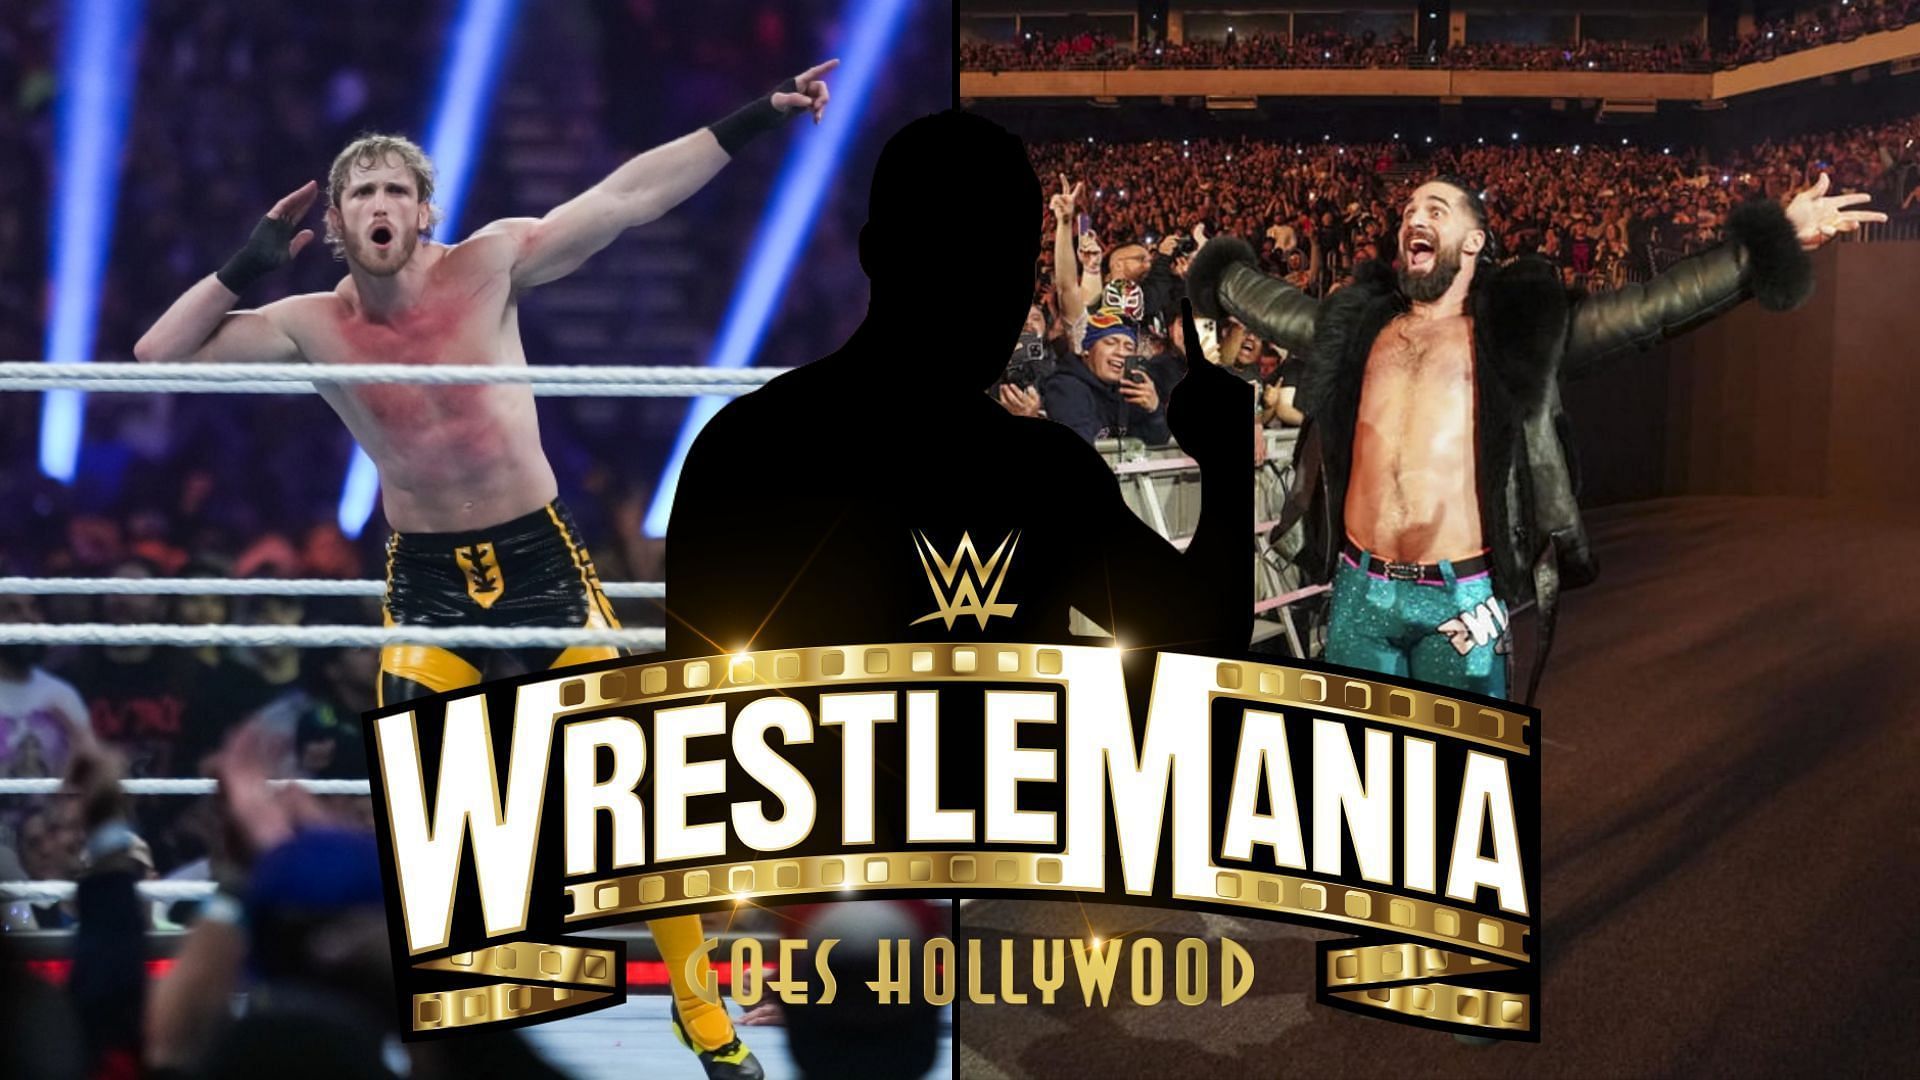 Amid rumors of Logan Paul versus Seth Rollins at WWE WrestleMania Hollywood...